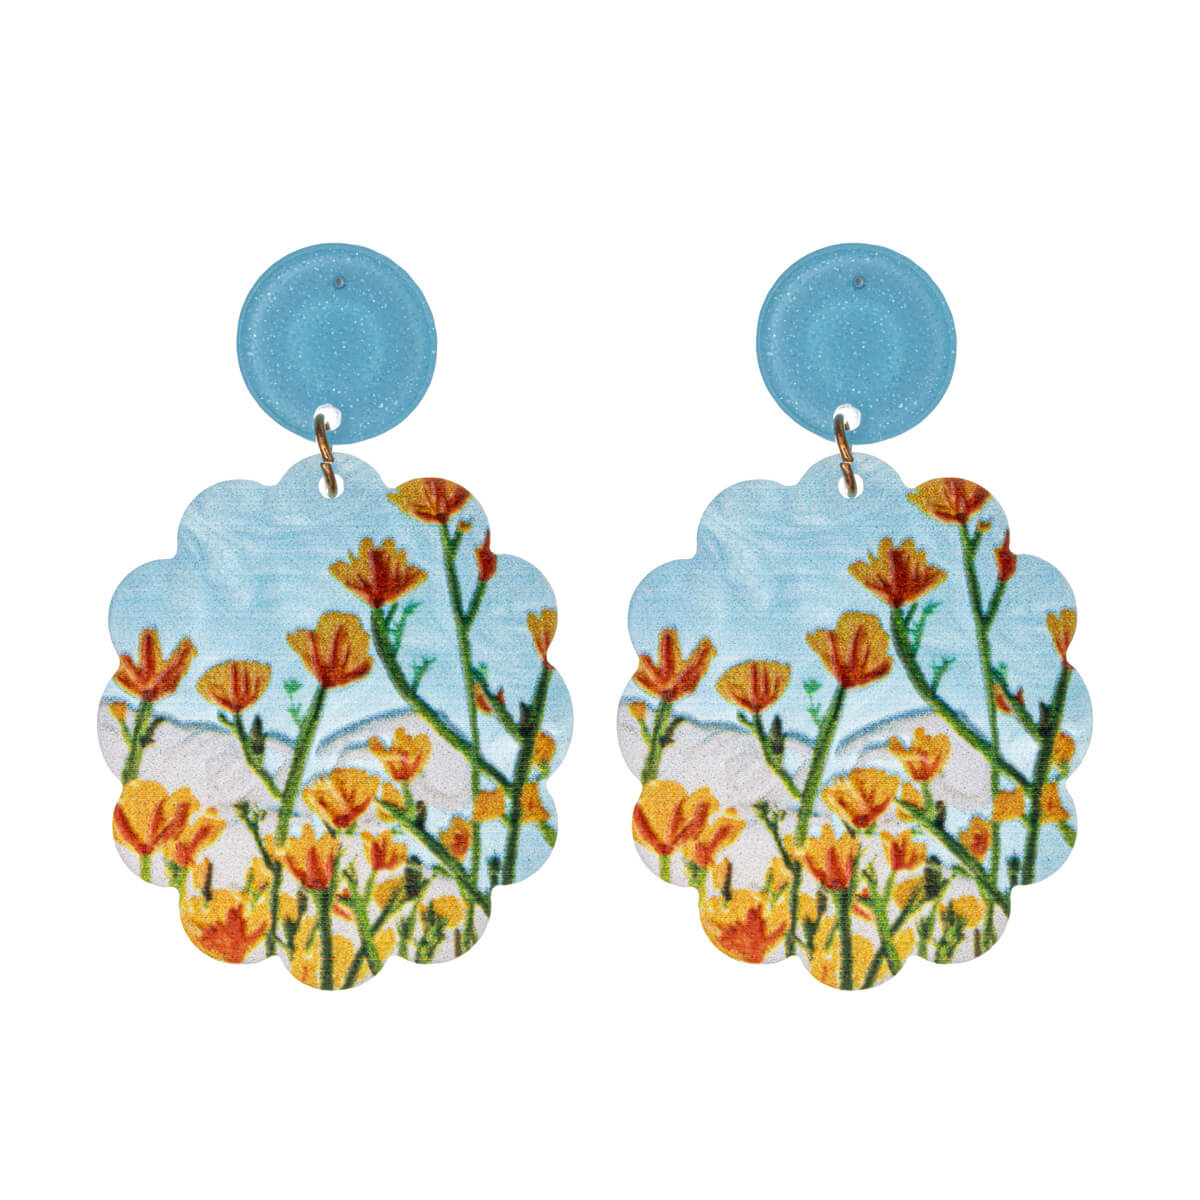 Hanging round flower earrings